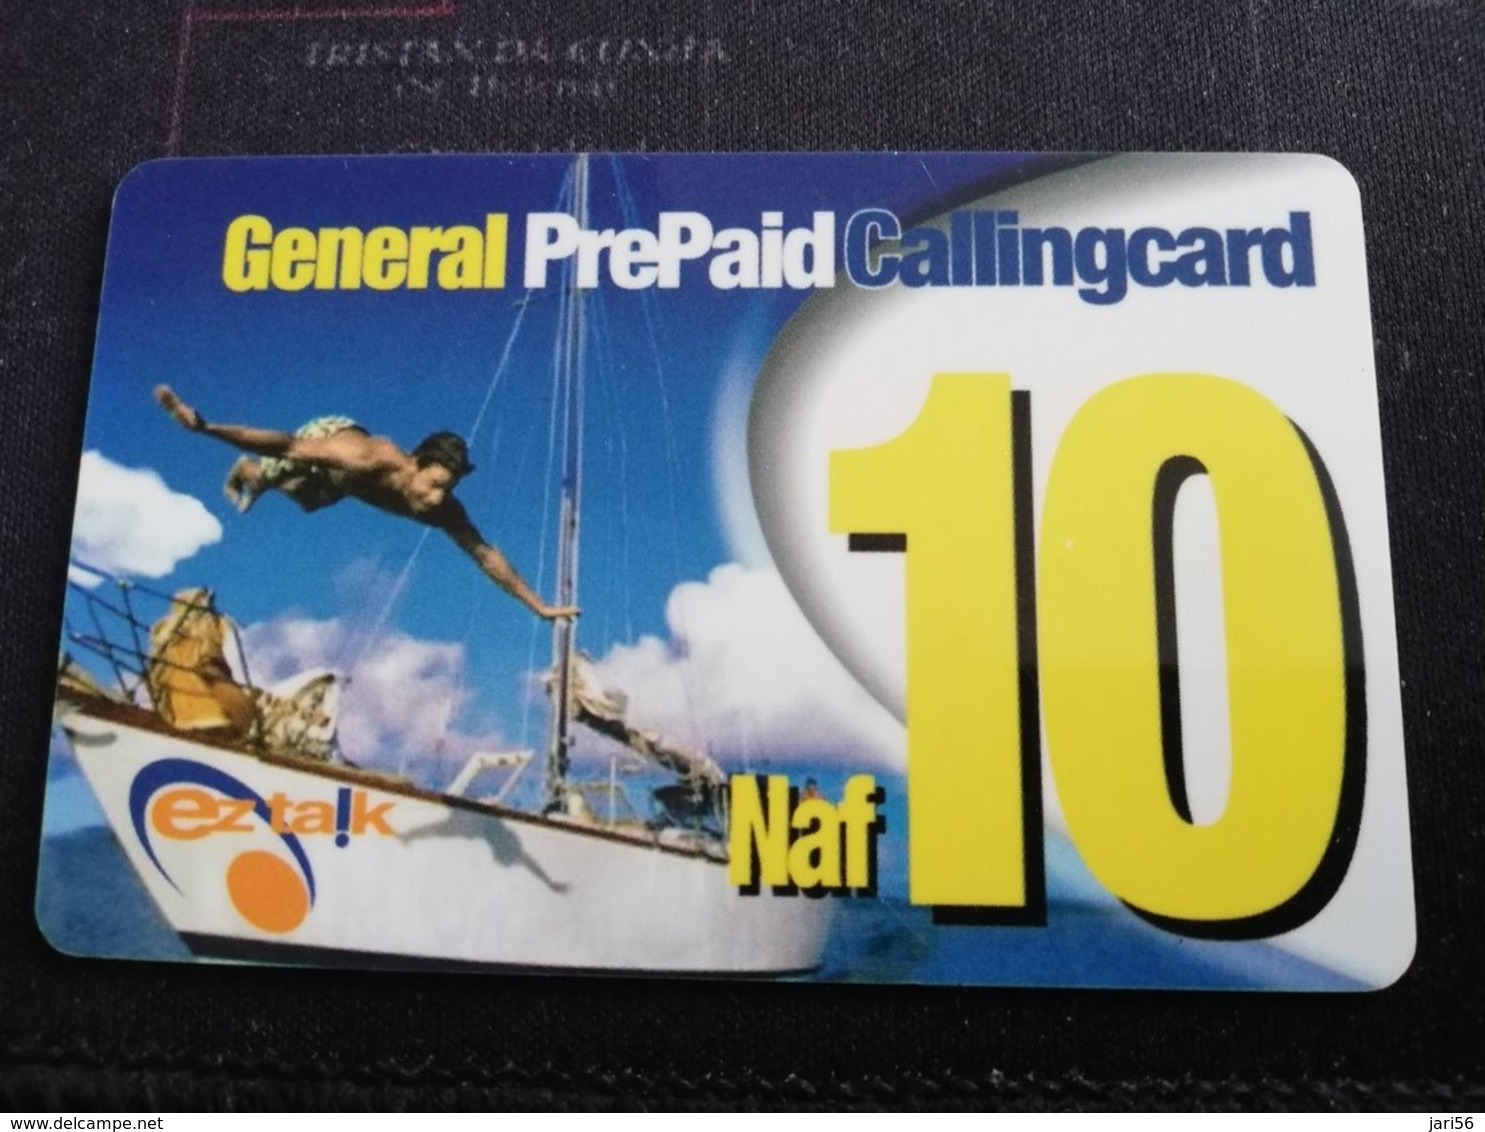 CURACAO NAF 10  GENERAL PREPAID CALLINGCARD, EZ TALK  THICK CARD     ** 957** - Antilles (Neérlandaises)